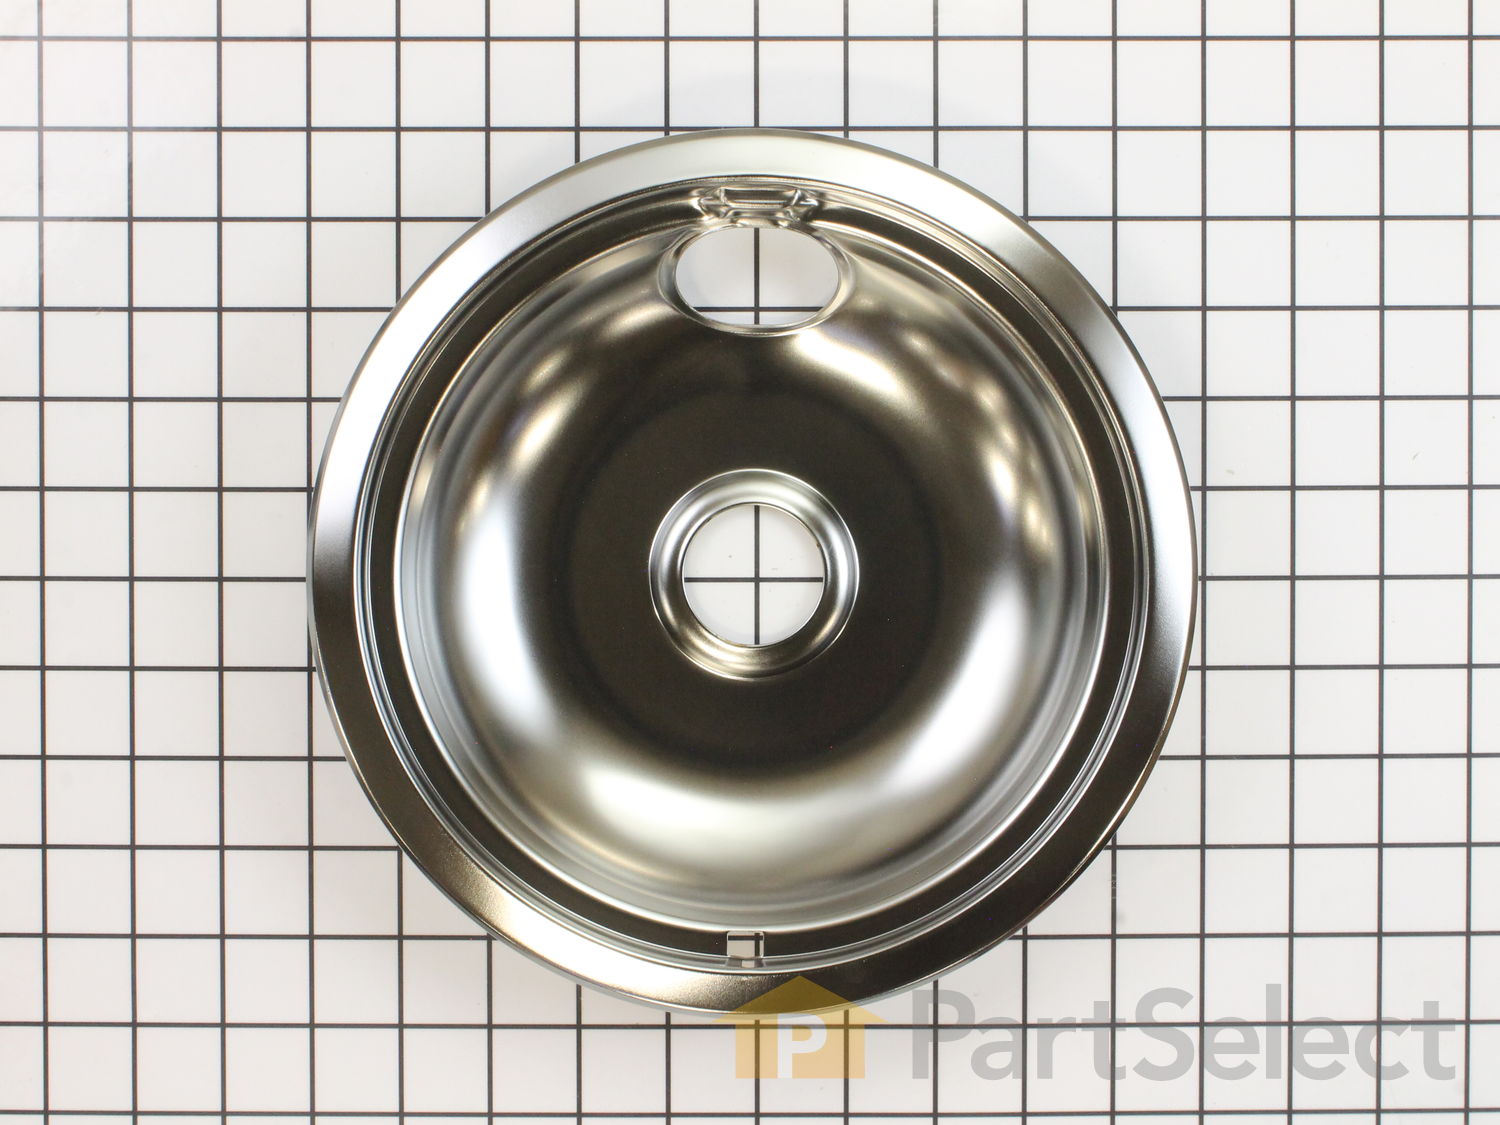 6" Burner Chrome Drip Pan Bowl Fits Dacor 82053 